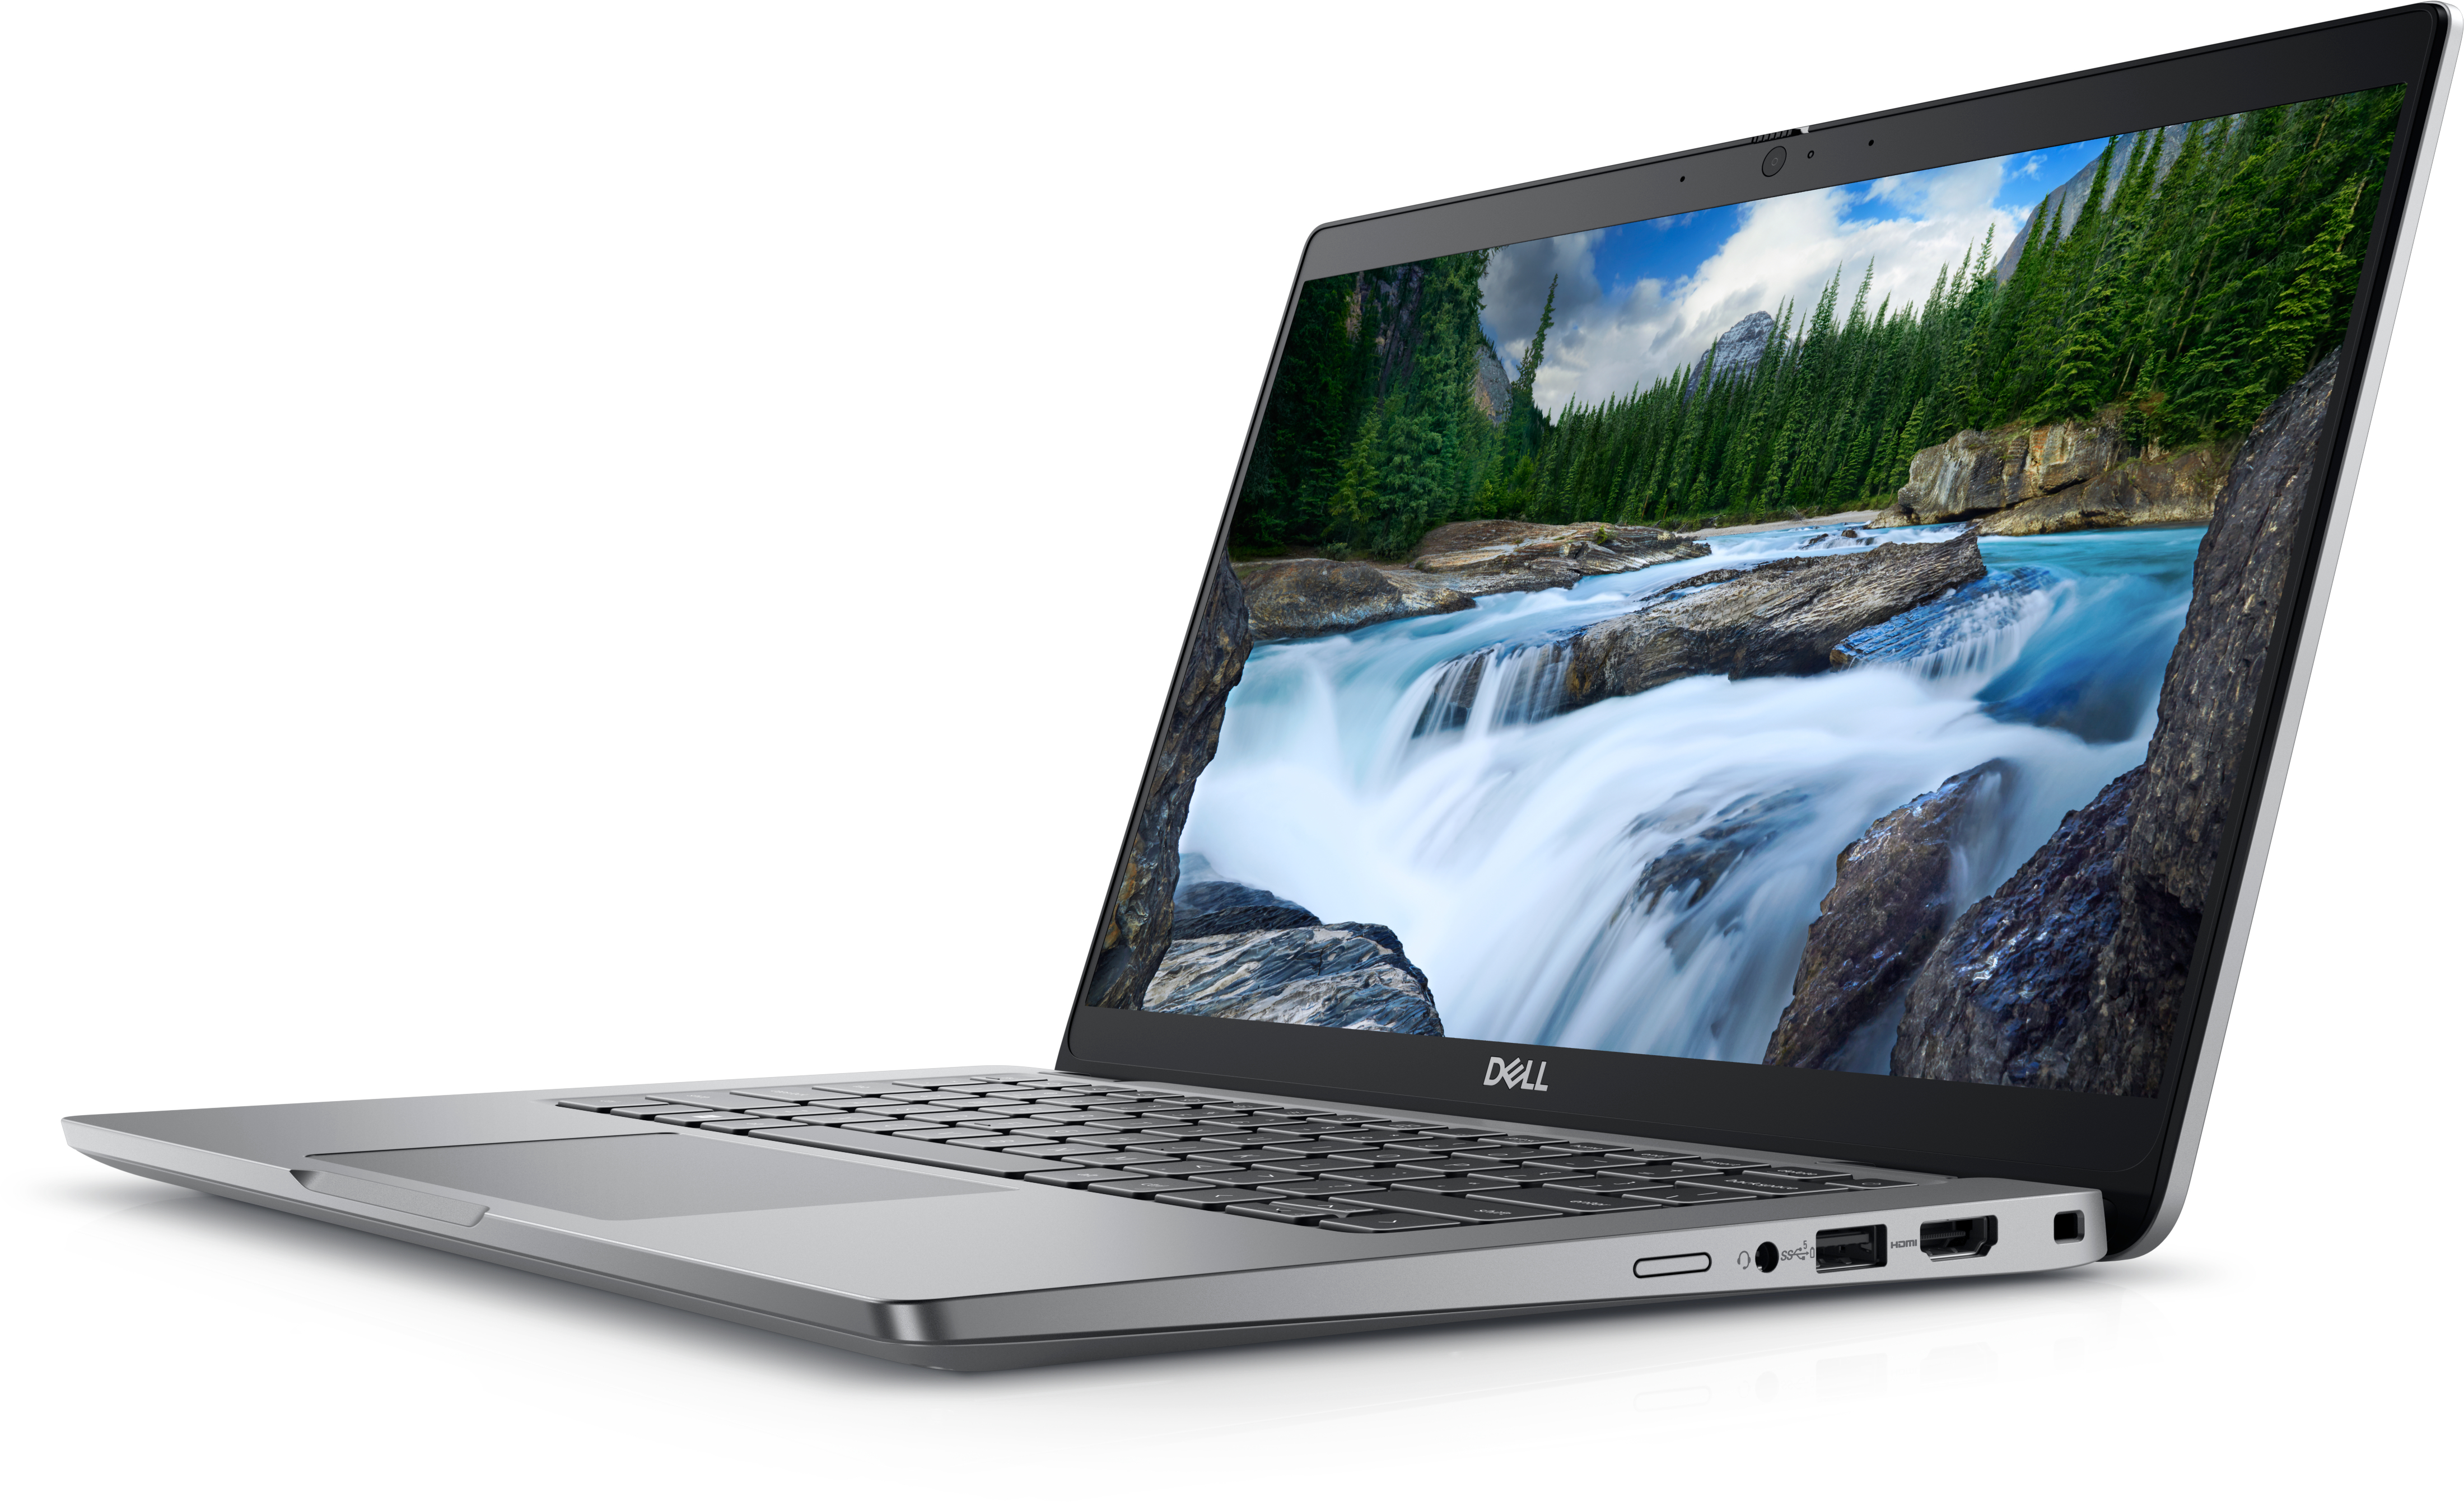 Dell Latitude 5340 Business Laptop - W/ 13th Gen Intel Core - 13.3 FHD Screen - 8GB - 256G